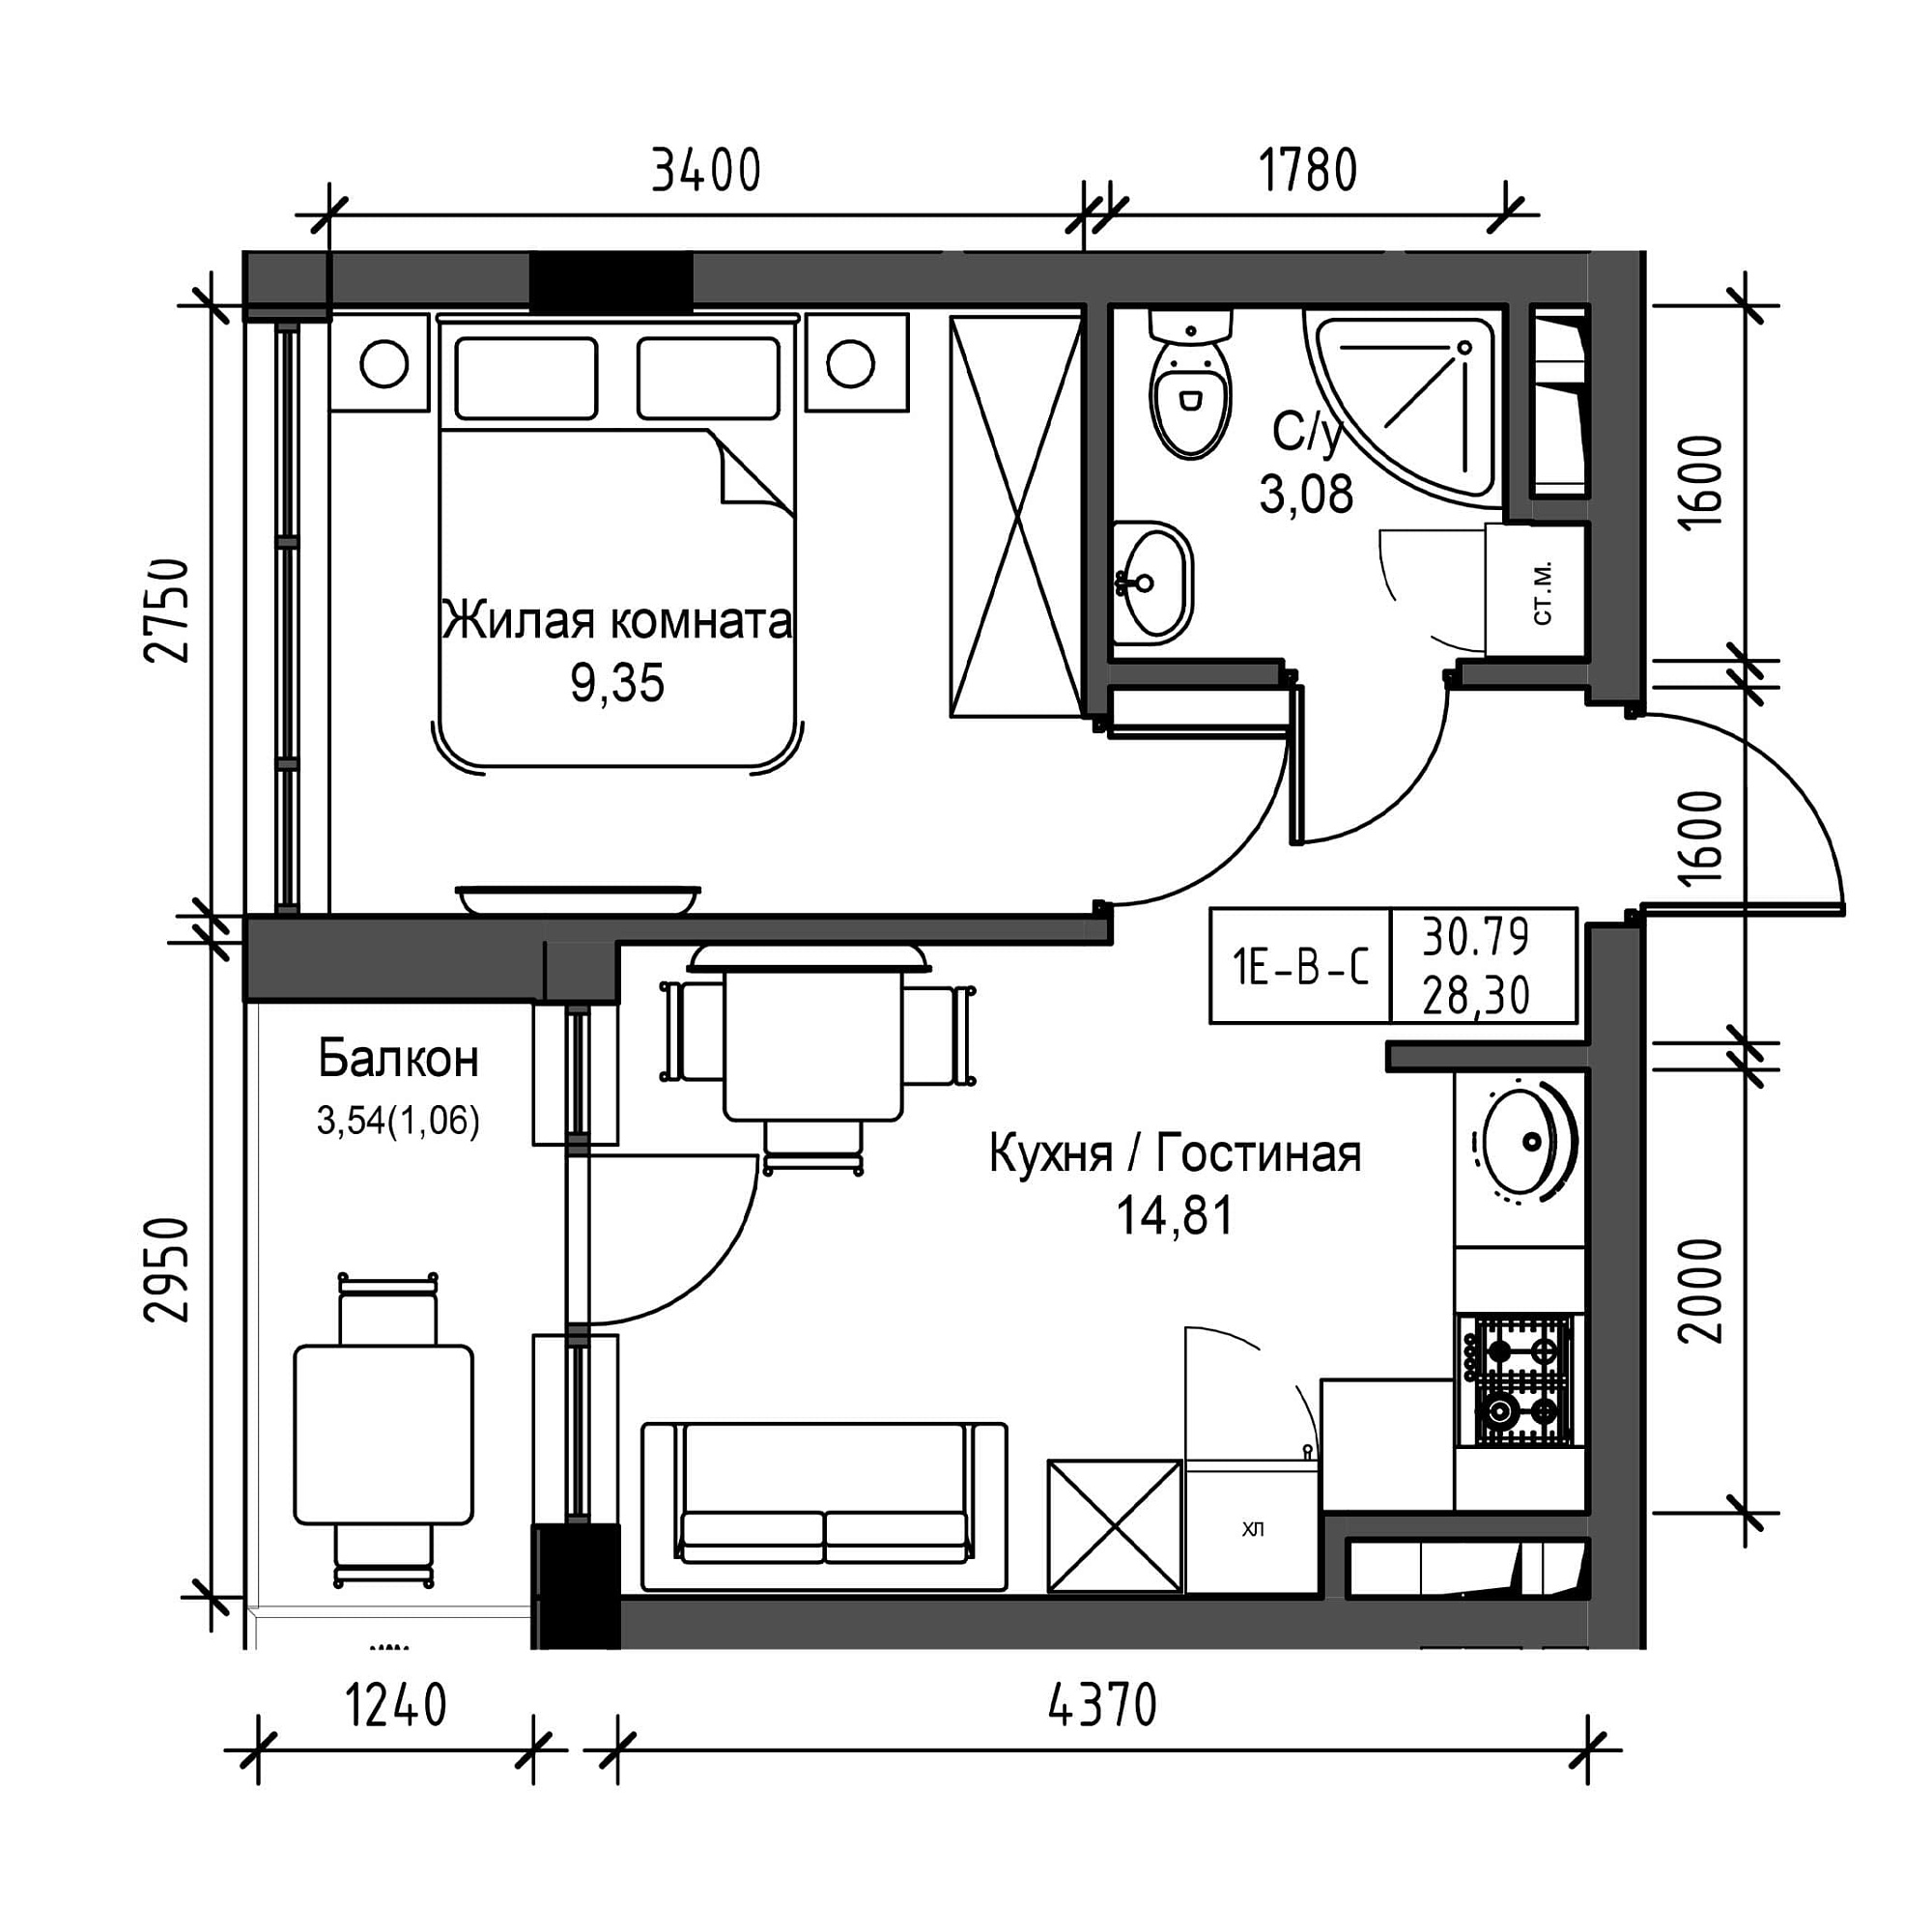 Planning 1-rm flats area 28.3m2, UM-001-03/0015.